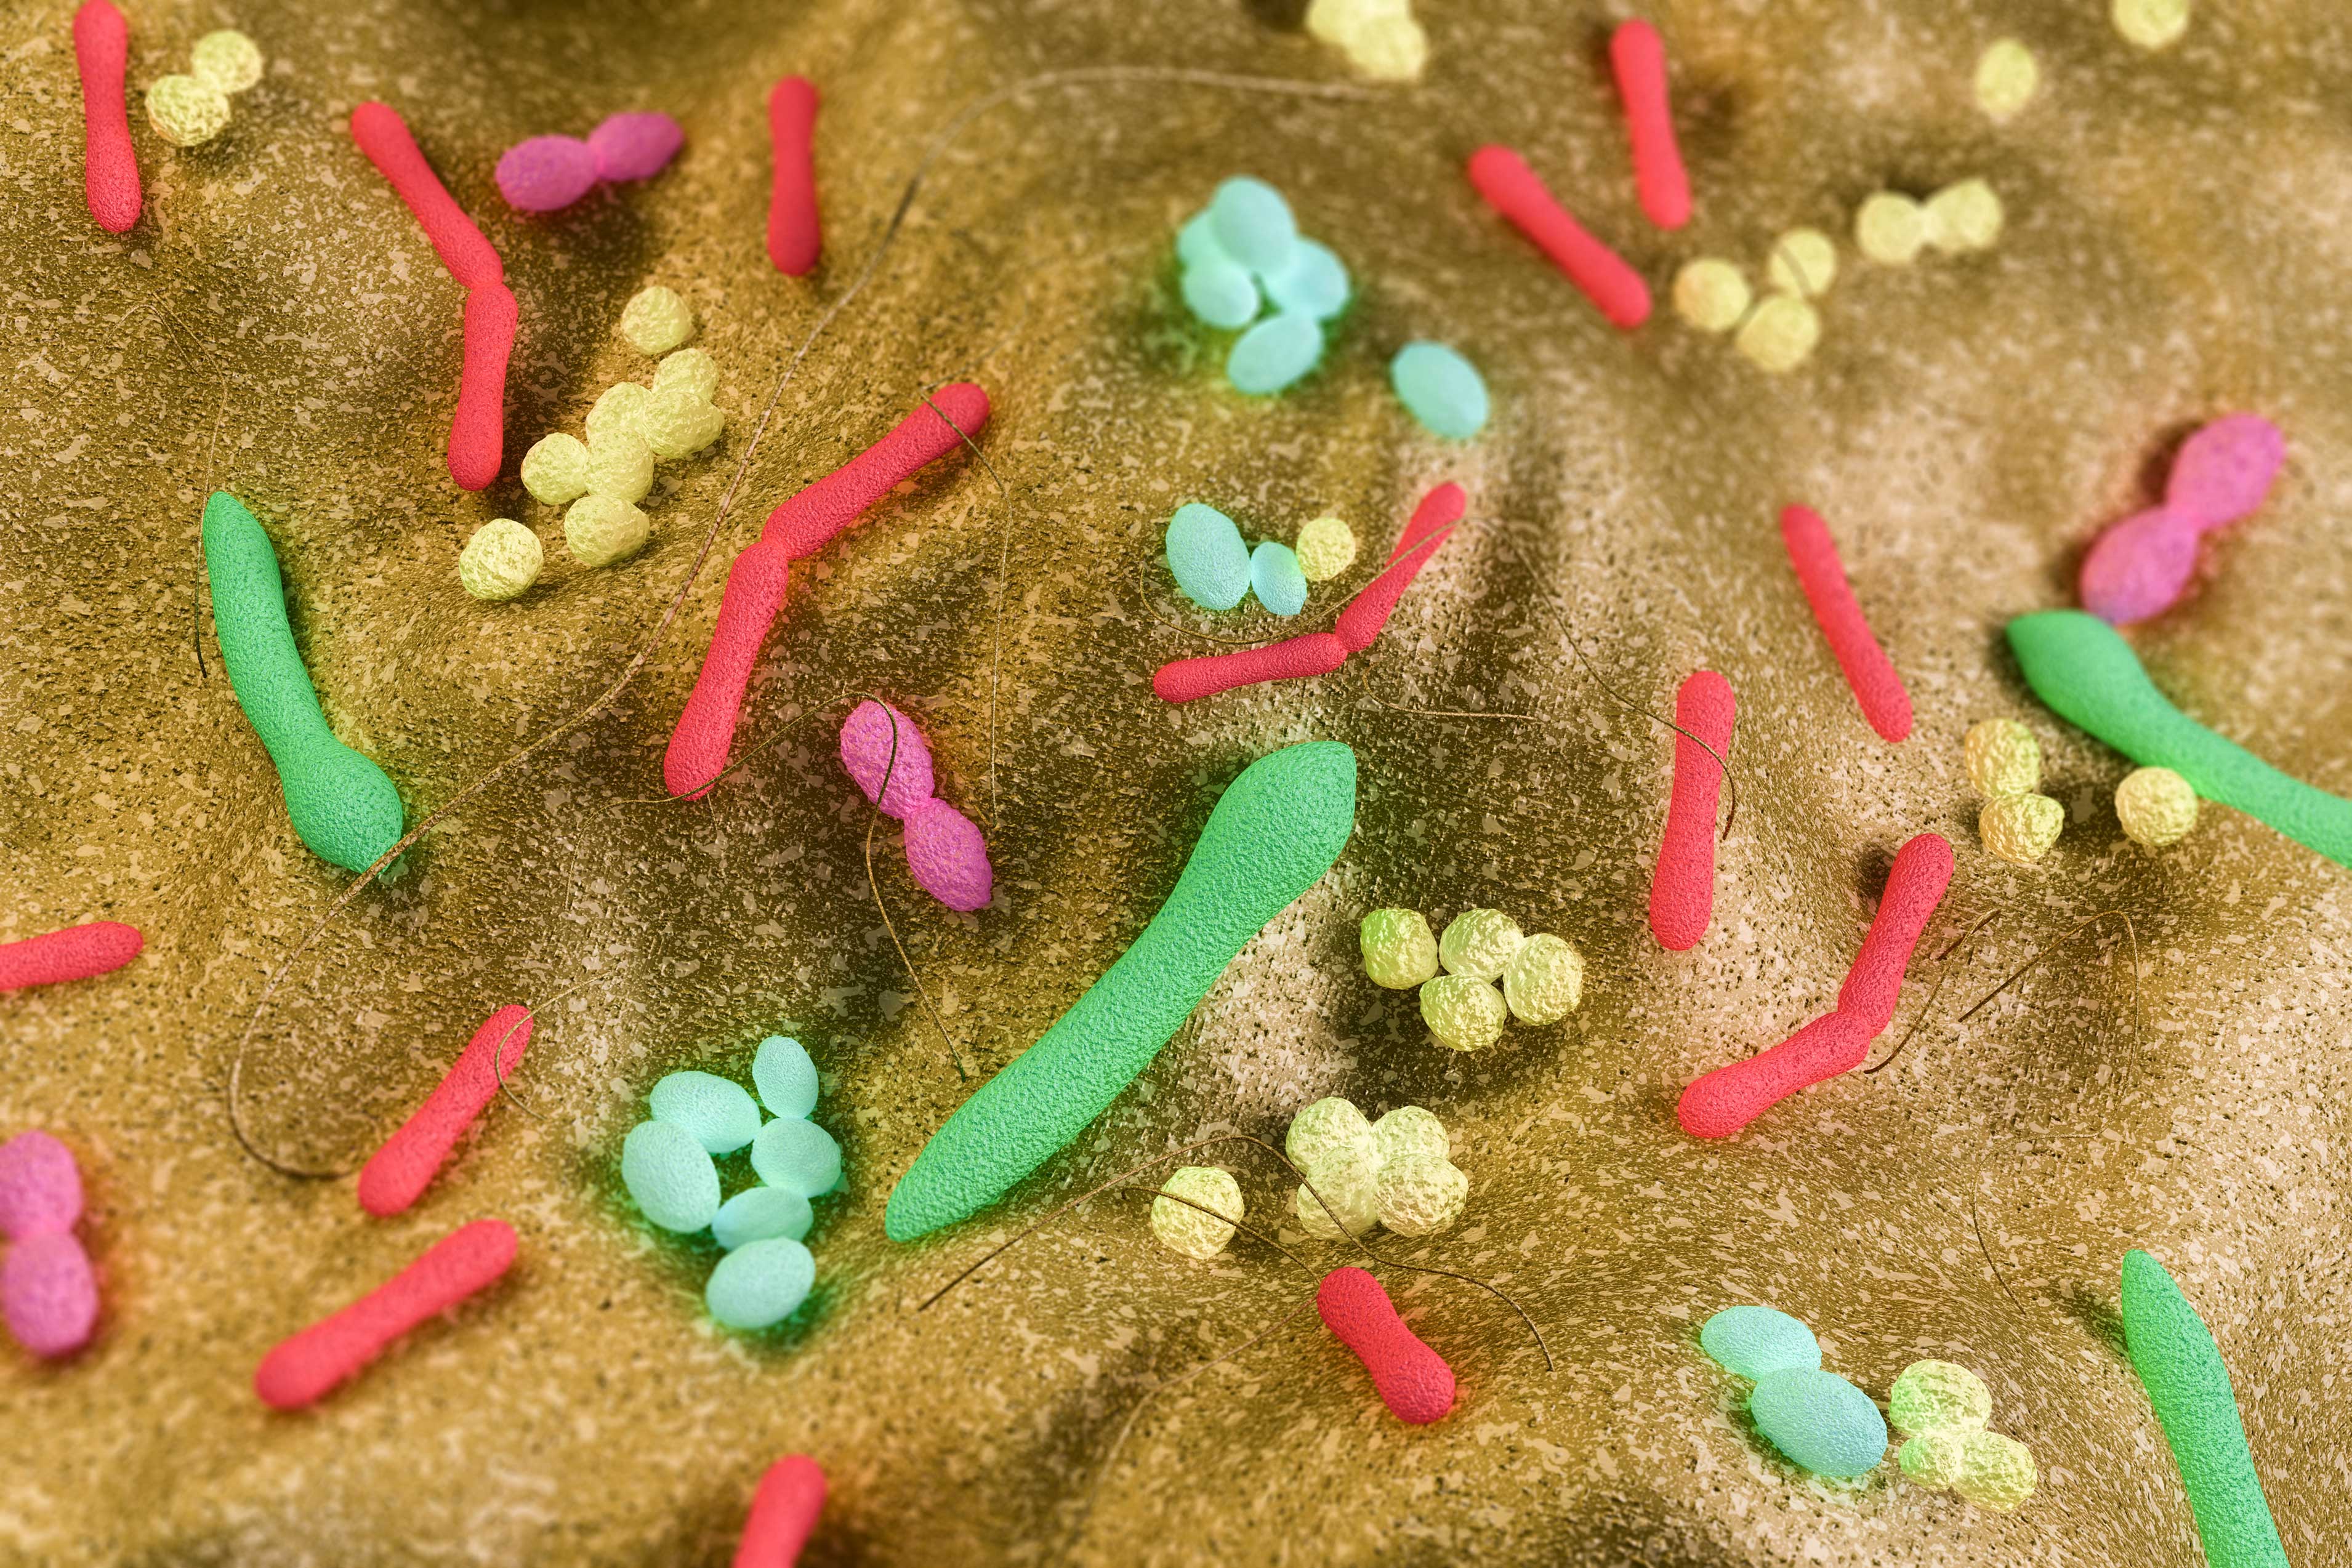 Короче бактерии. Микробы в кишечнике. Бактерии цветные. Микроорганизмы кишечника.